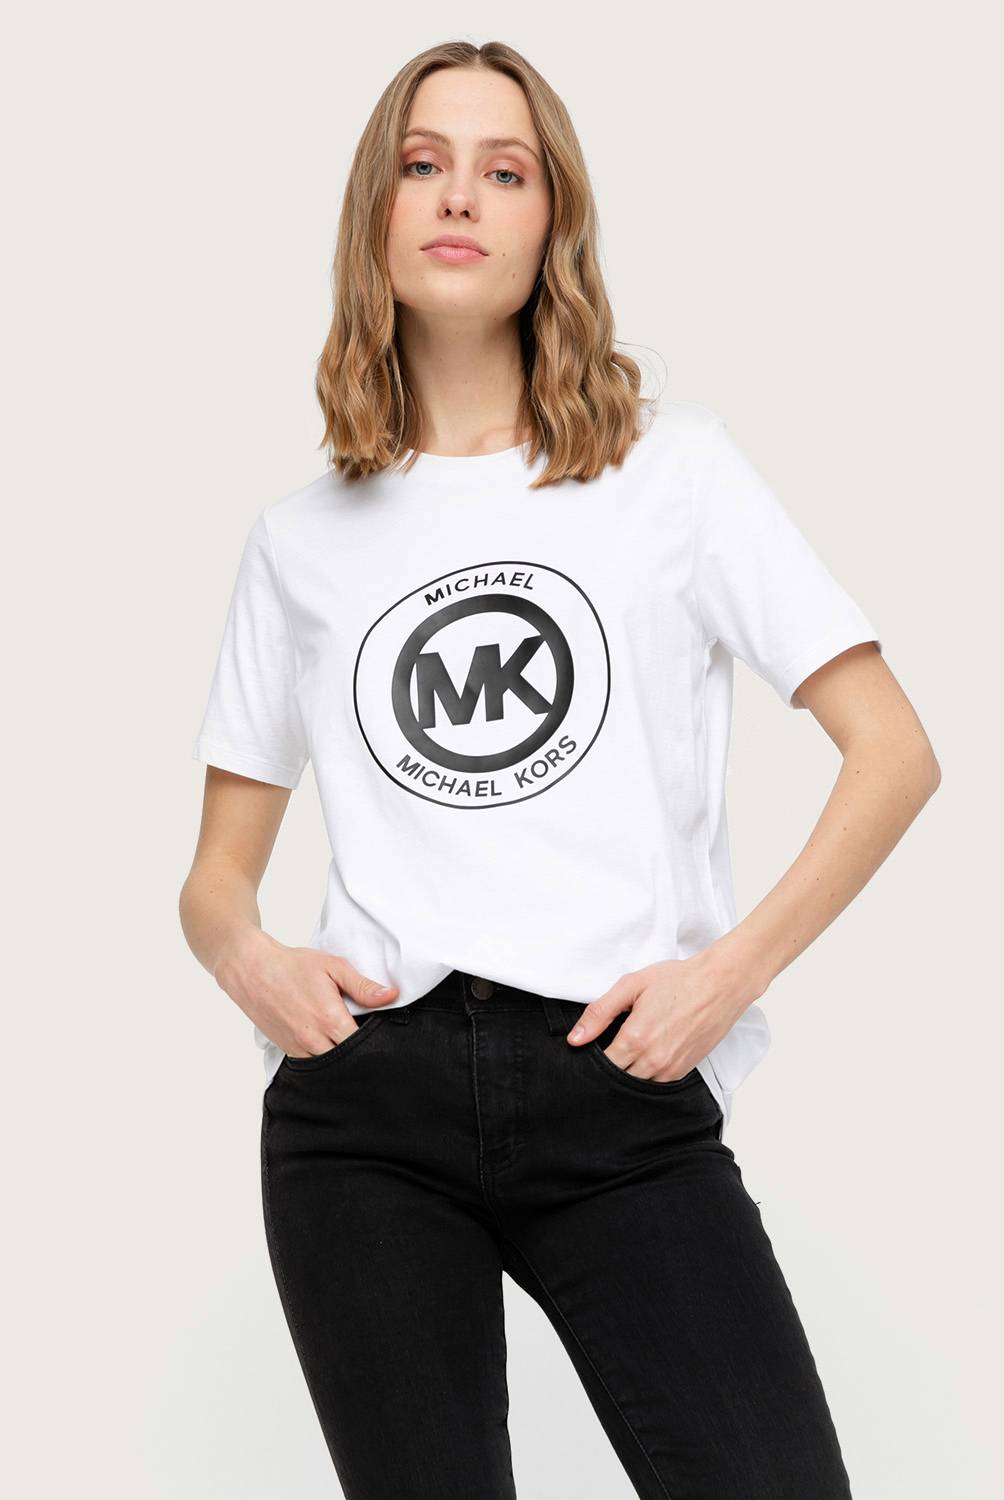 MICHAEL KORS - Michael Kors Polera Logo Mujer